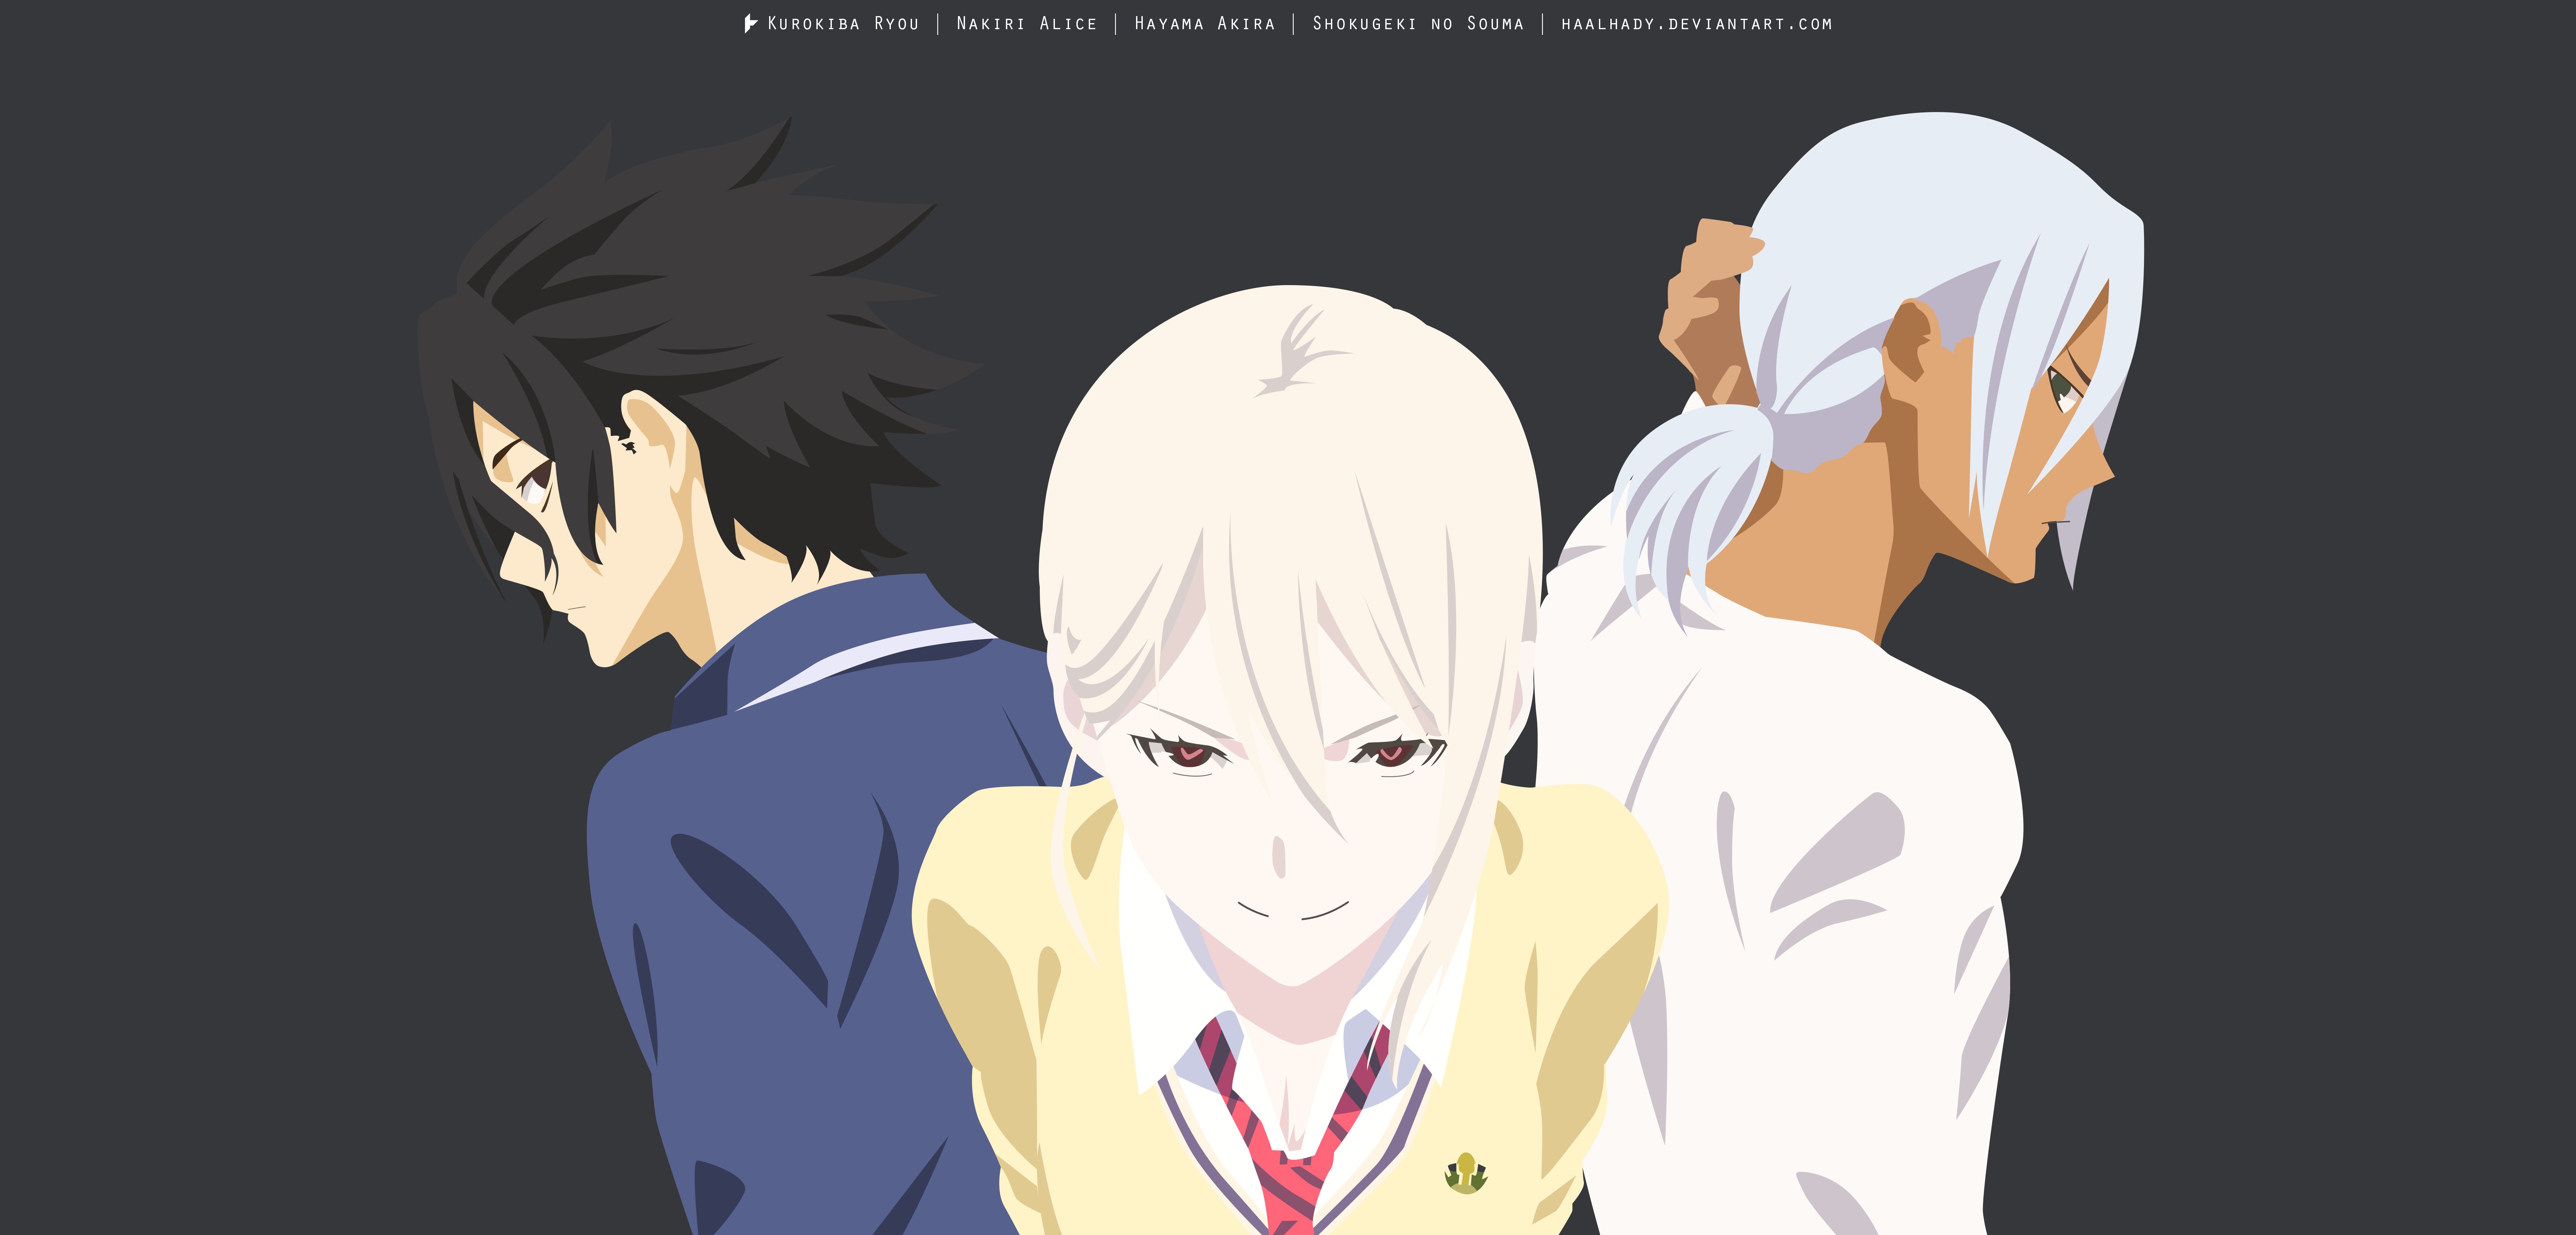 907846 Bild herunterladen animes, essenskriege: shokugeki no soma, akira hayama, alice nakiri, ryō kurokiba - Hintergrundbilder und Bildschirmschoner kostenlos